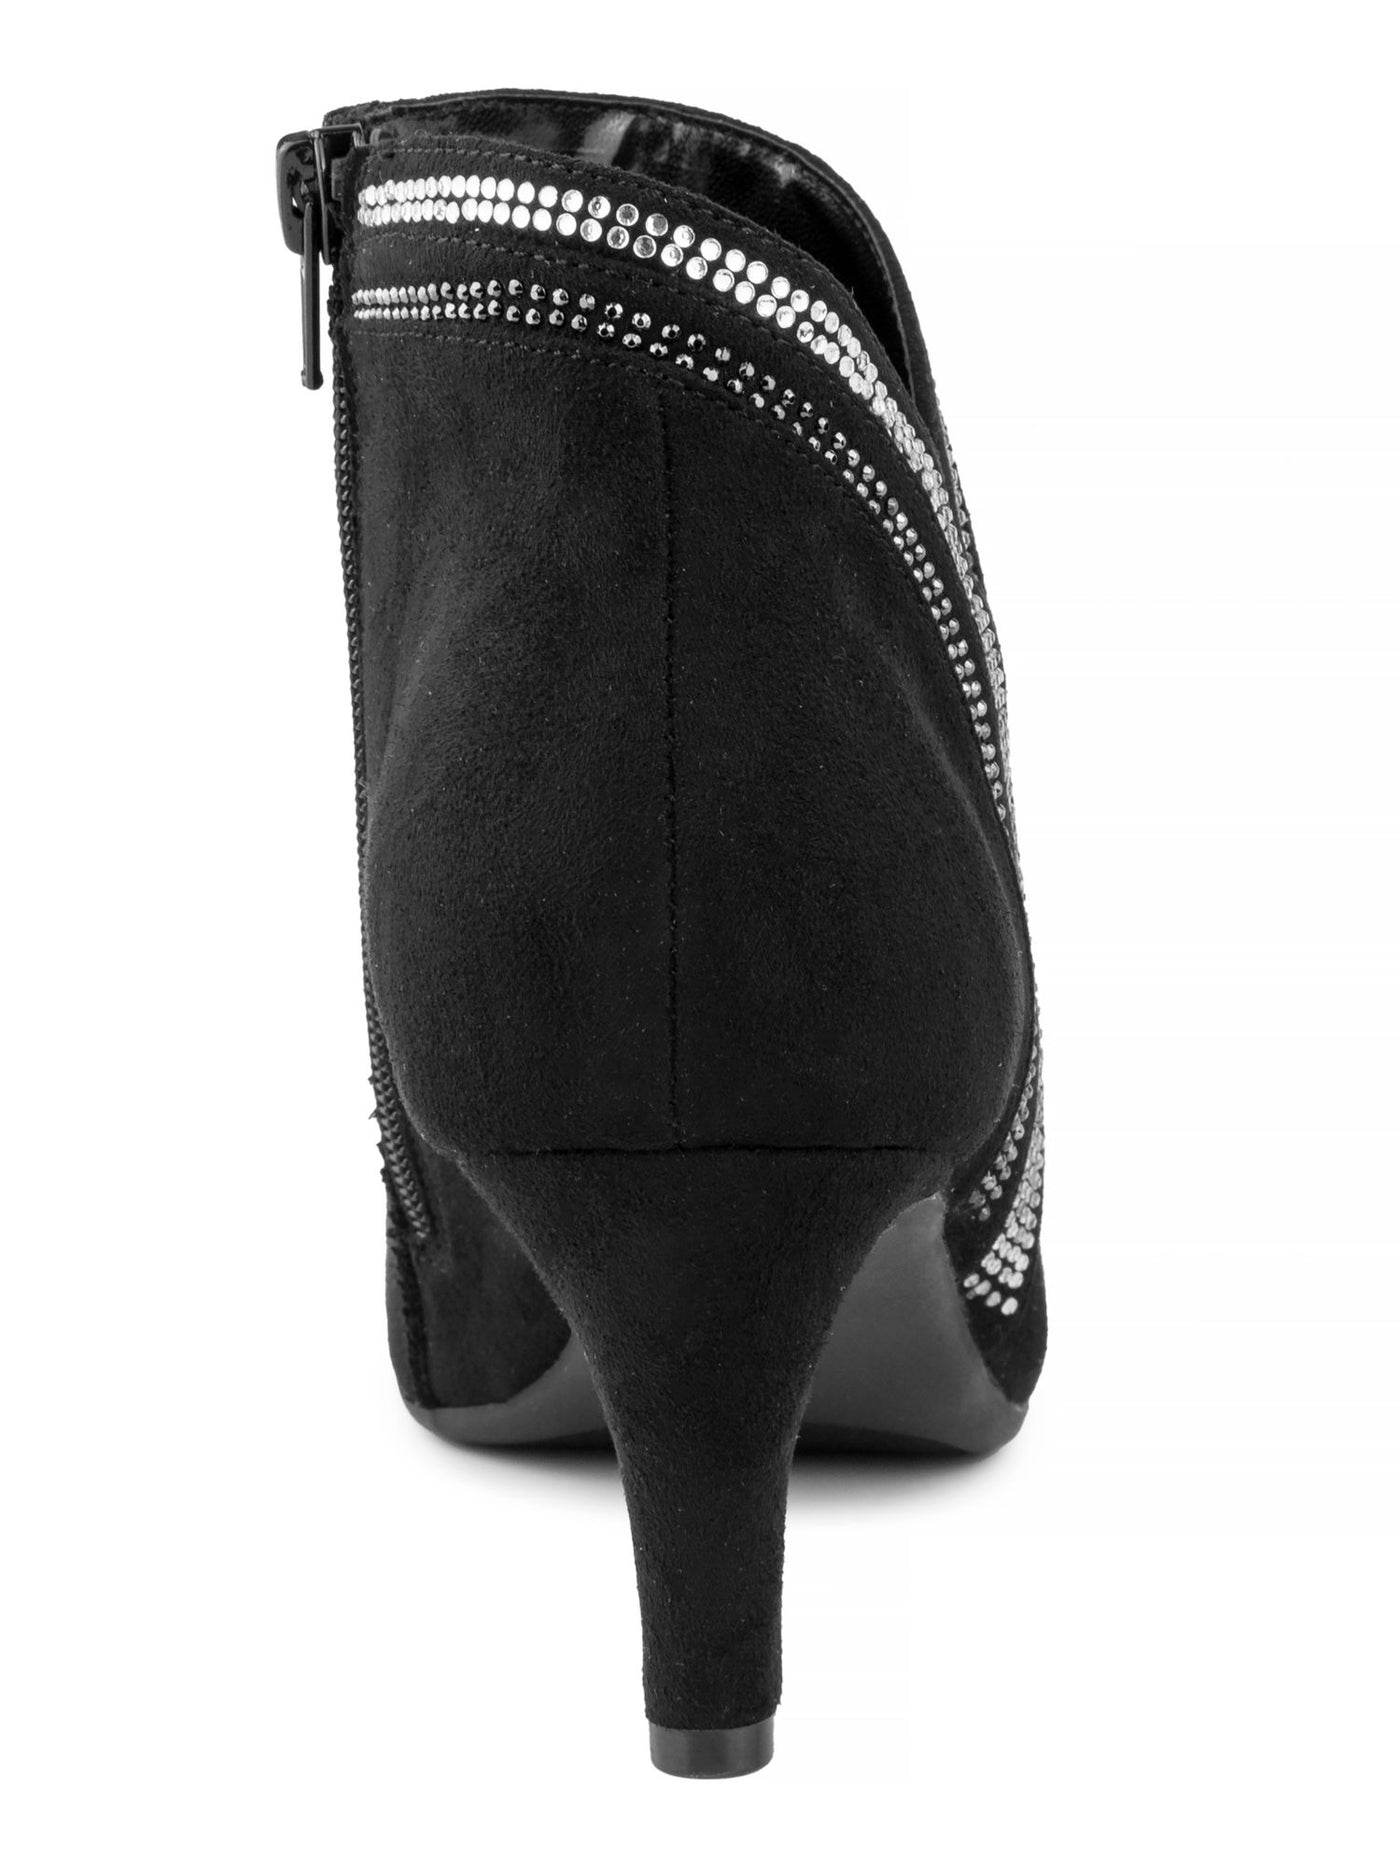 KAREN SCOTT Womens Black Embellished Rhinestone Trim Almond Toe Stiletto Zip-Up Dress Booties 9.5 M